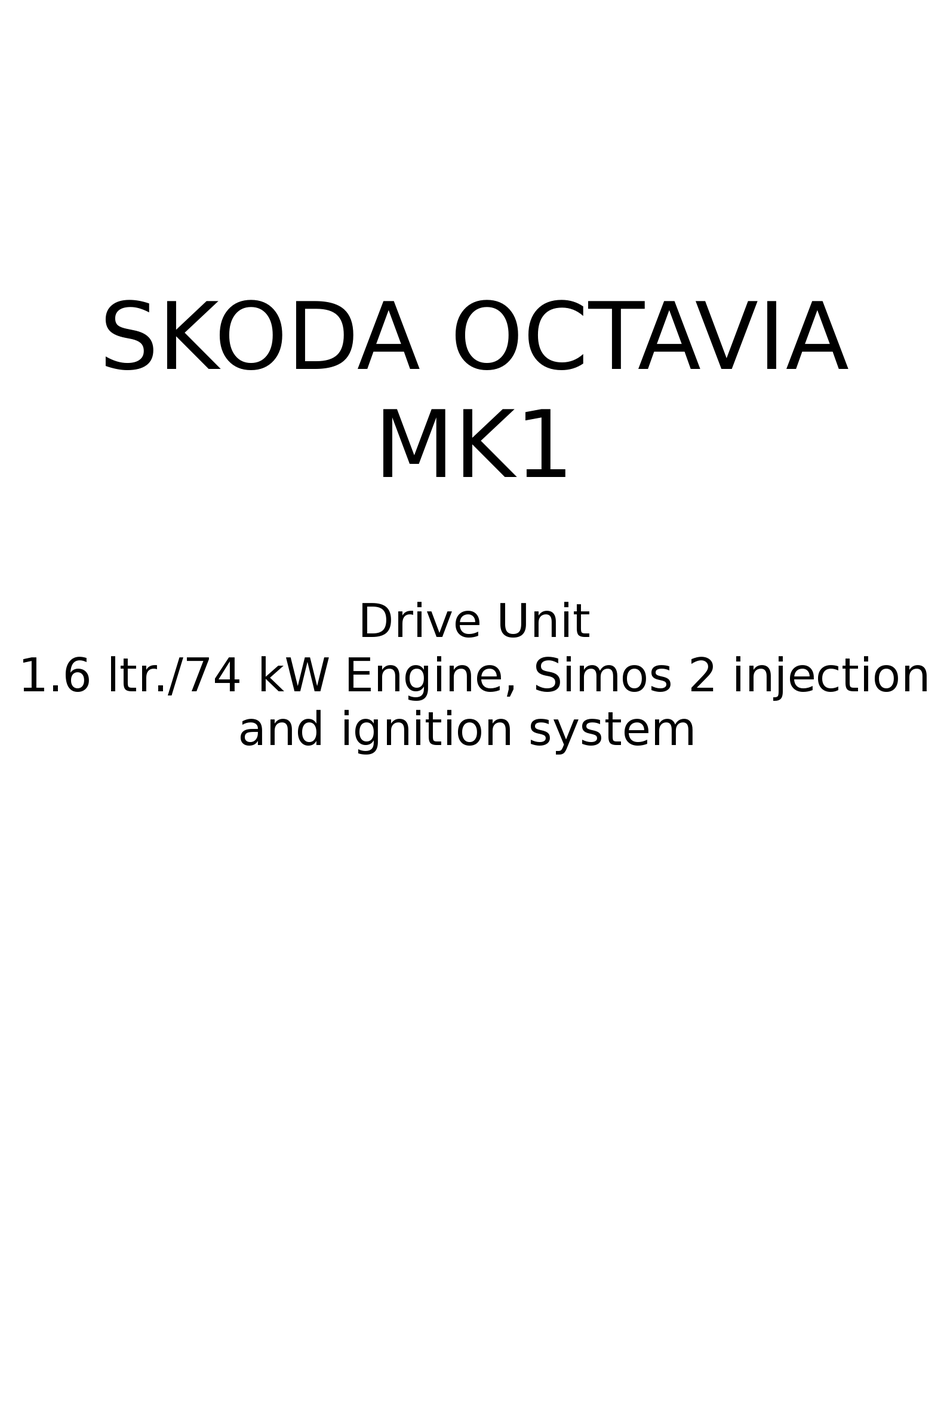 Skoda Octavia Mk1 Service Manual Pdf